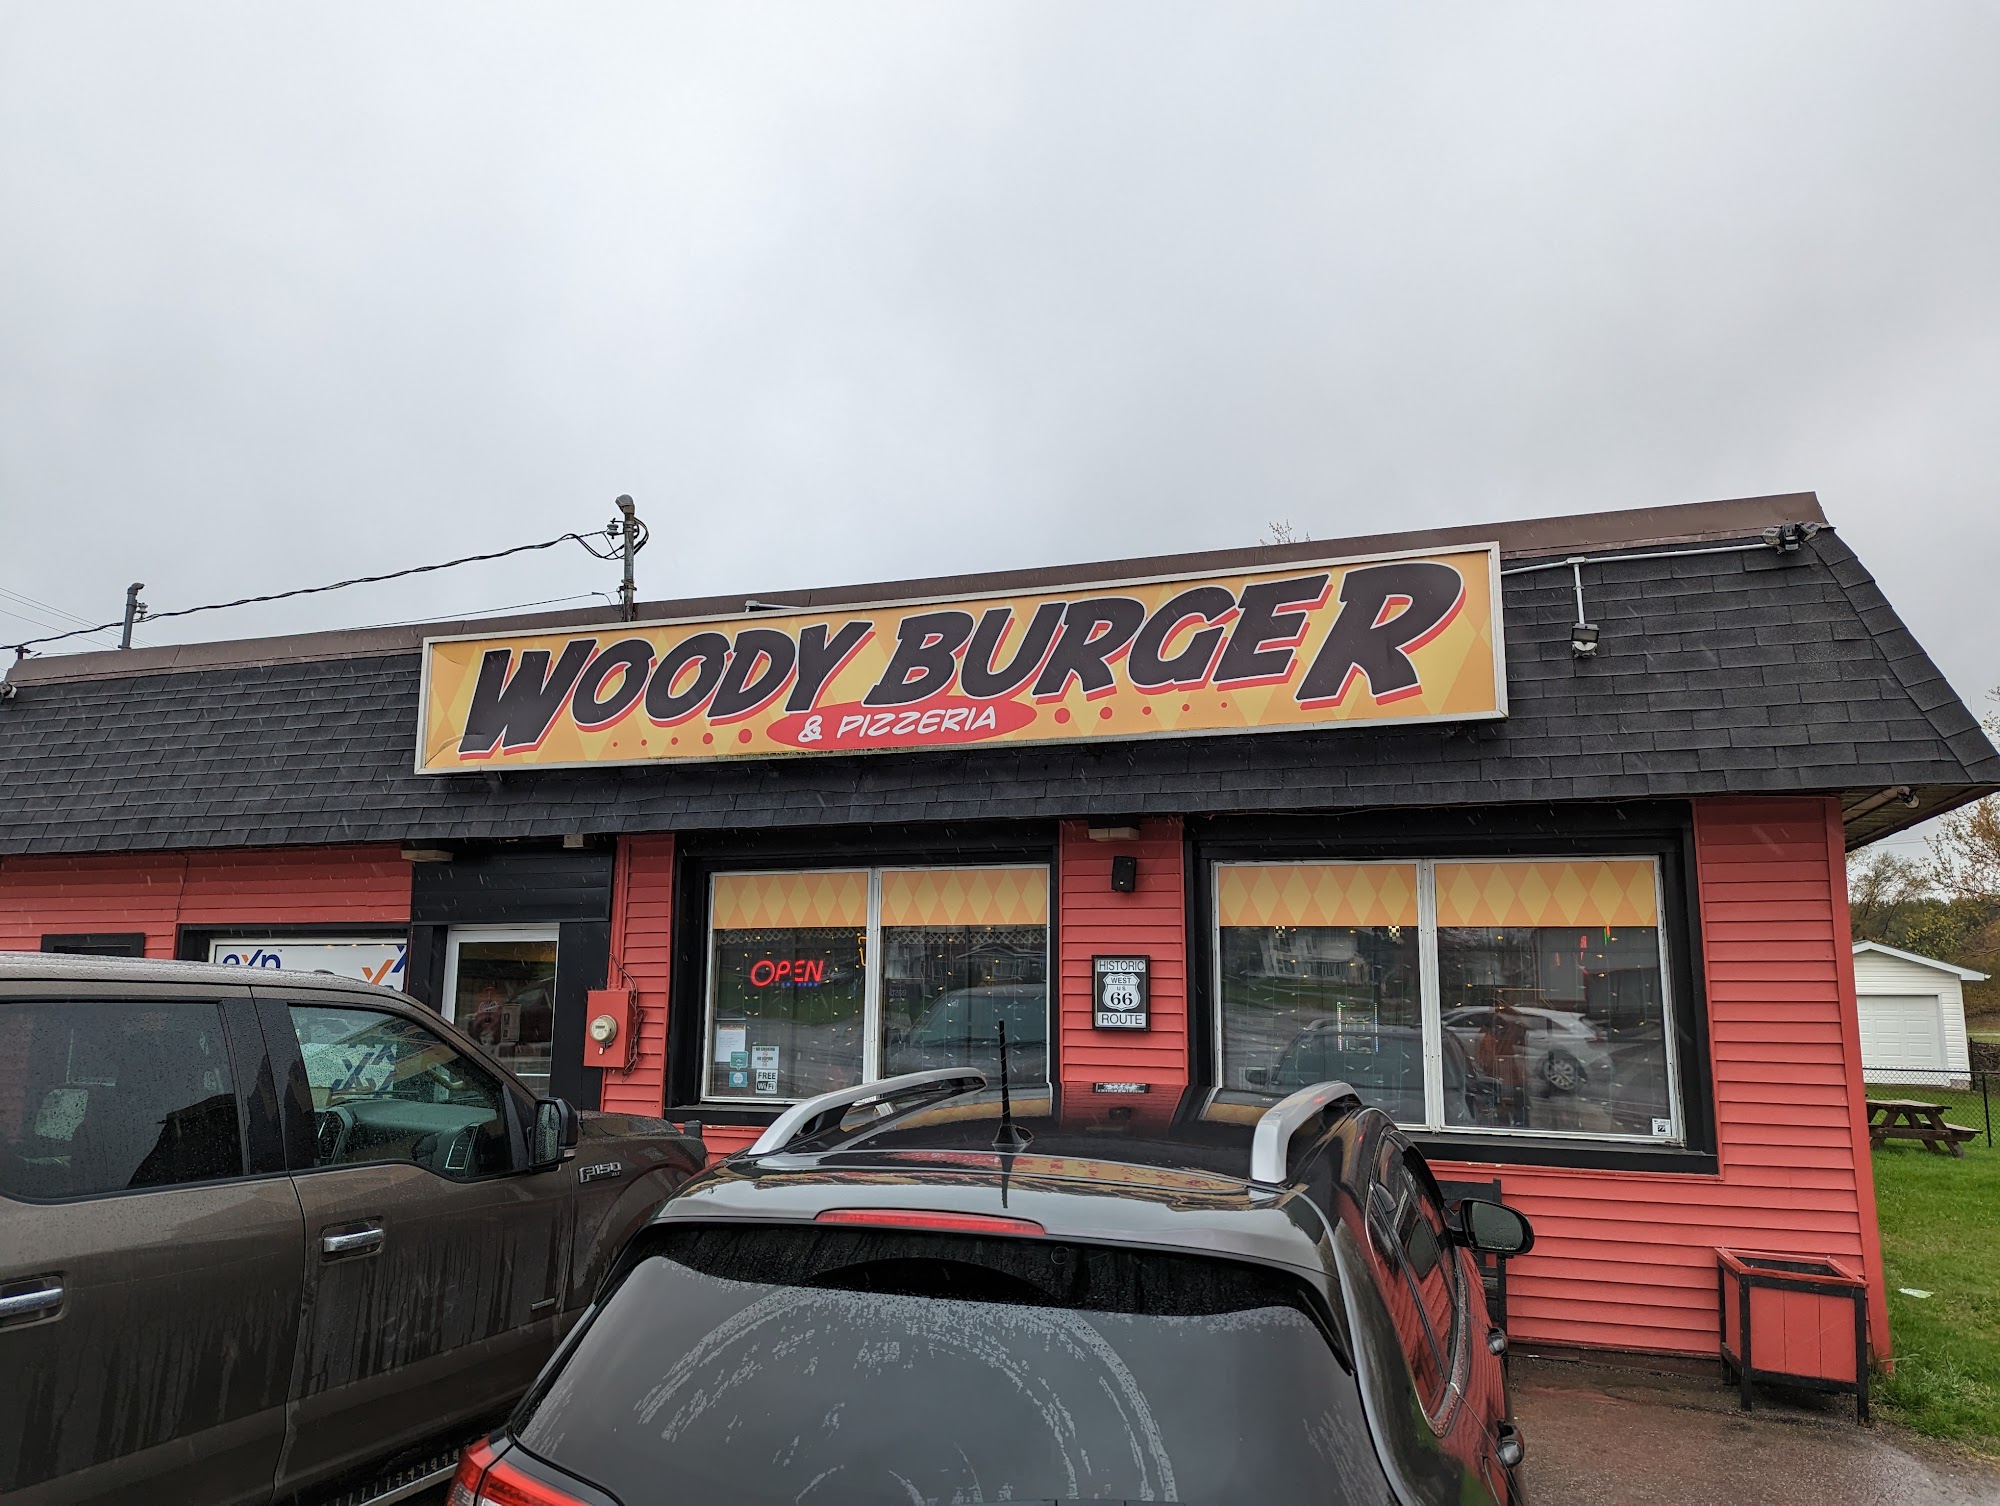 Woody Burger & Pizzeria